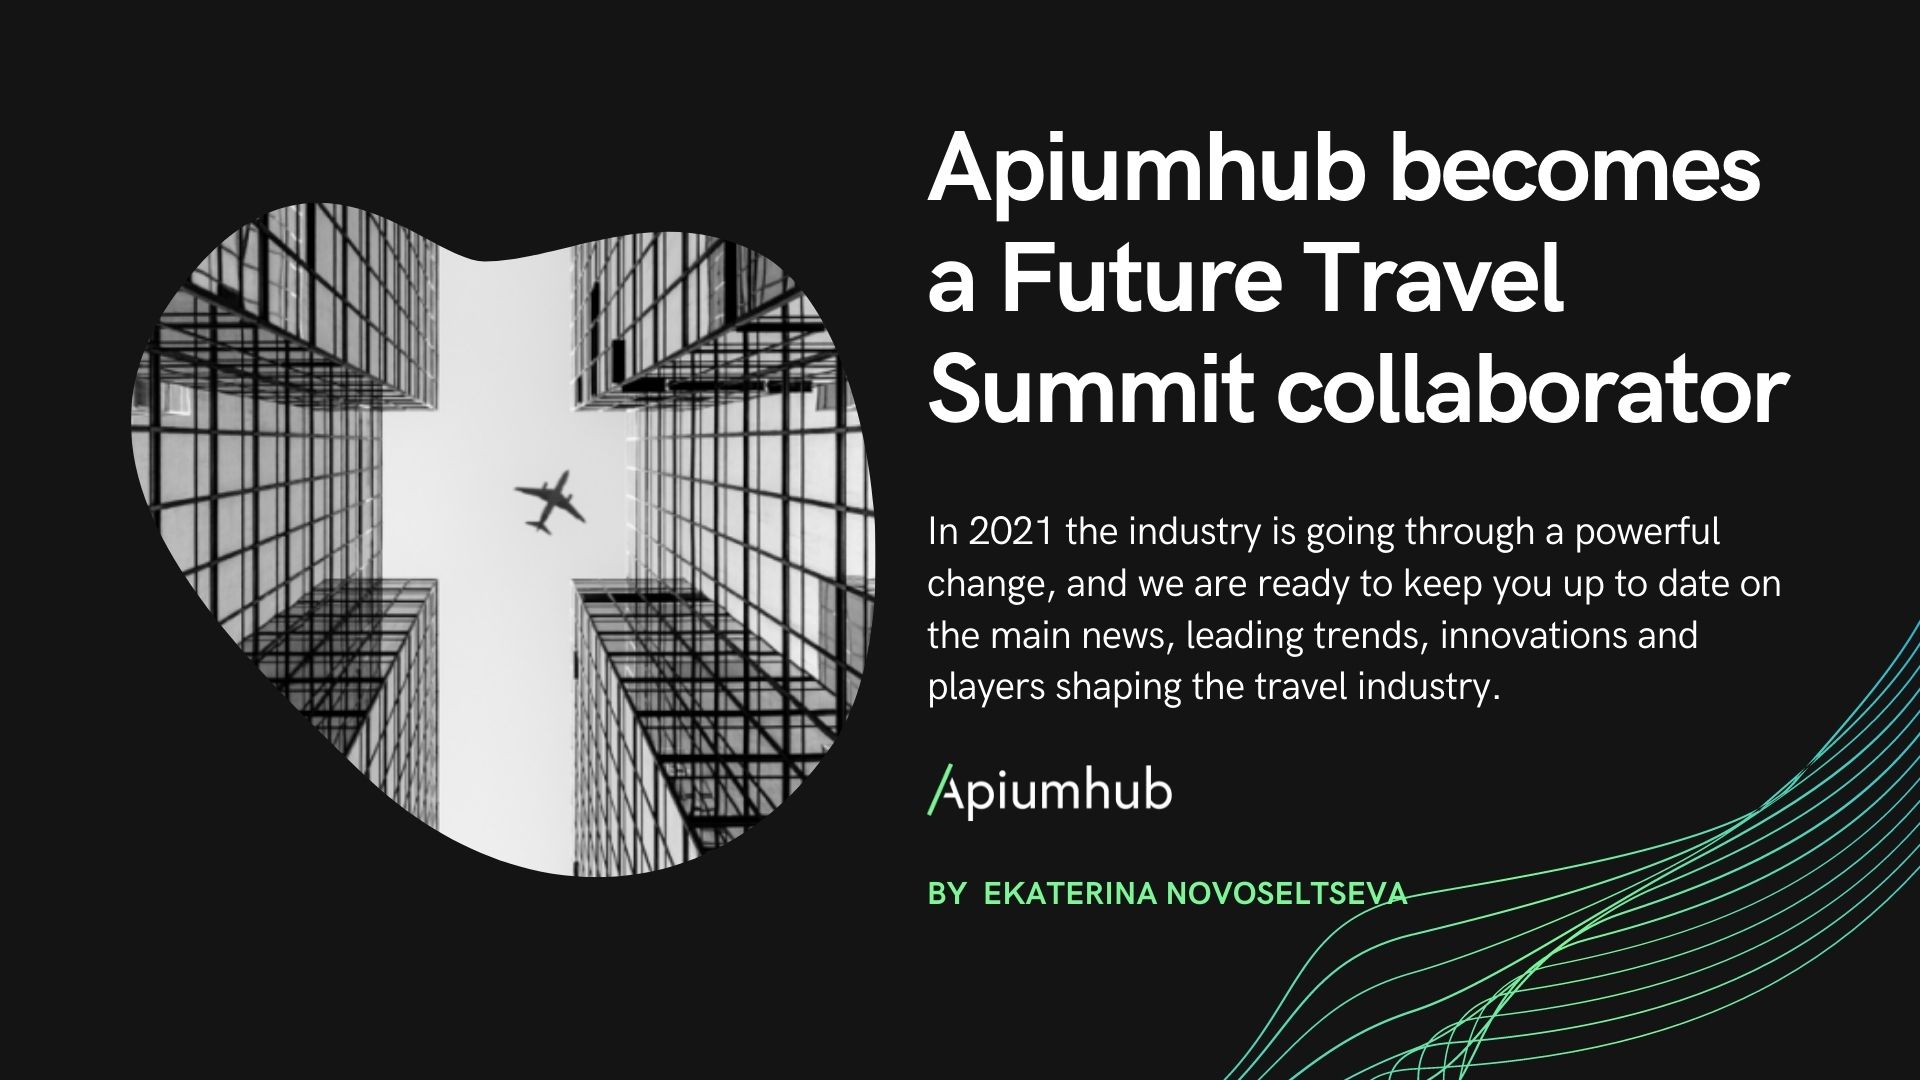 Apiumhub becomes a Future Travel Summit collaborator